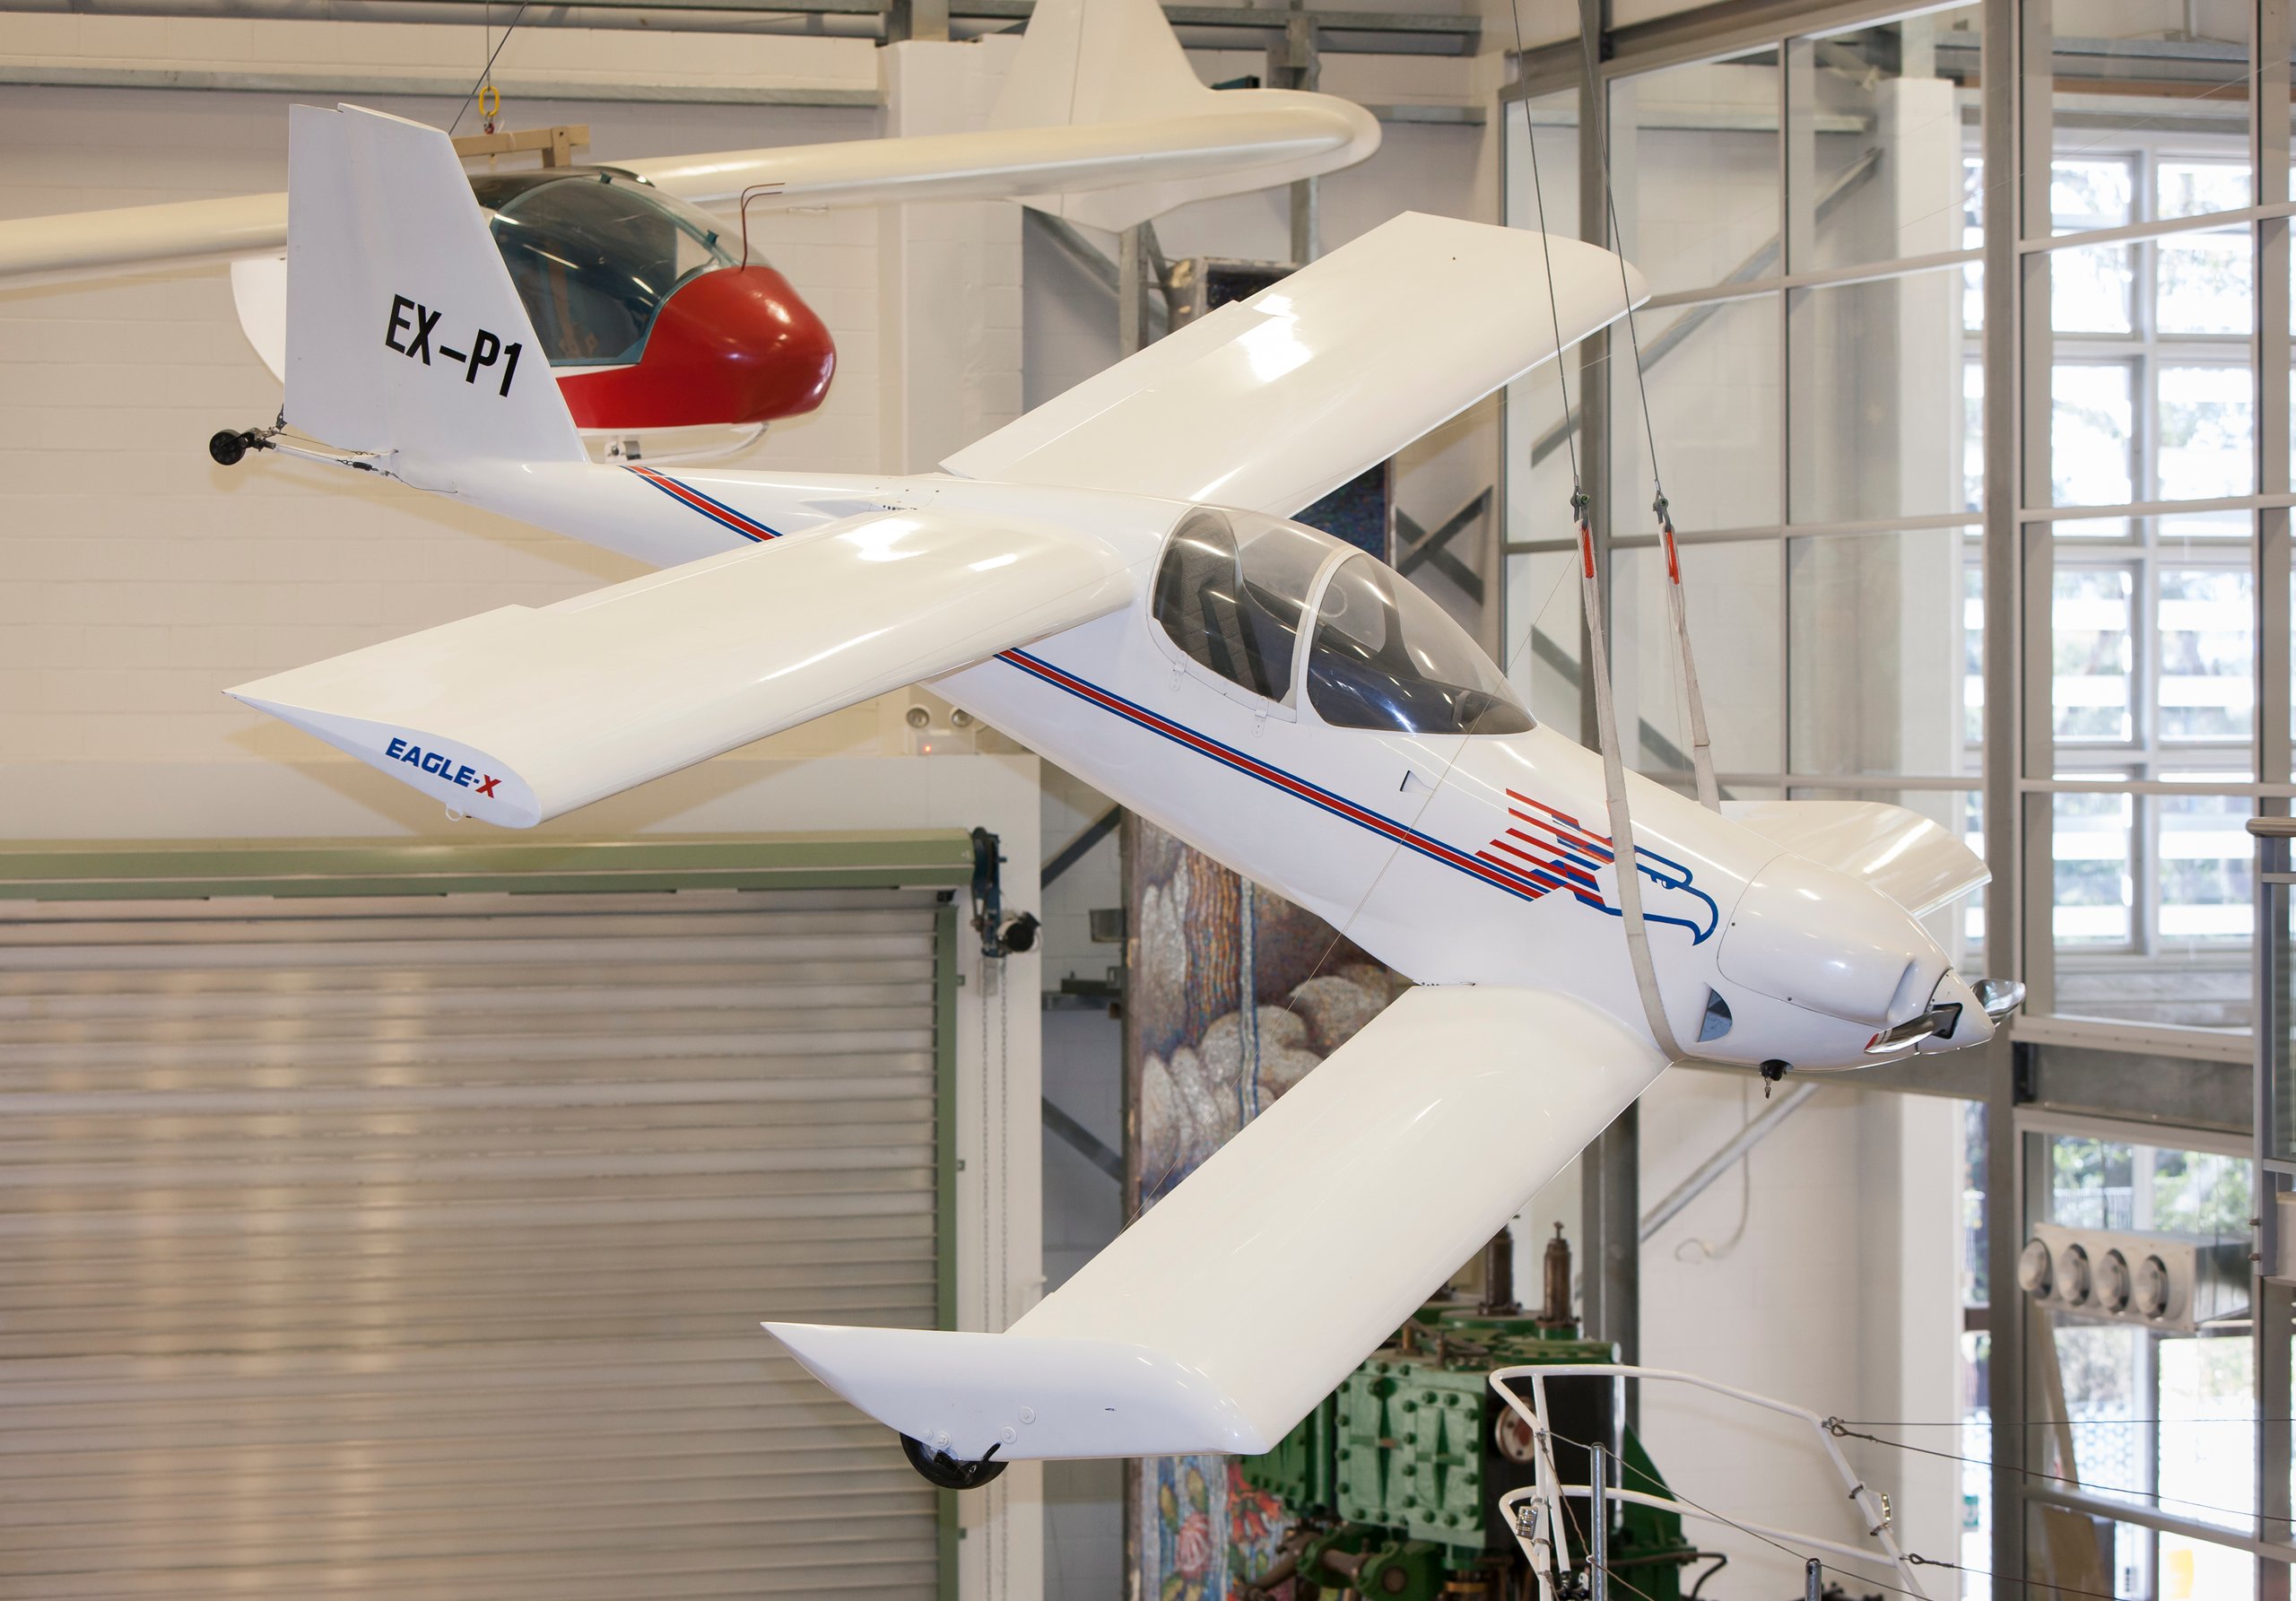 Eagle-X aircraft prototype